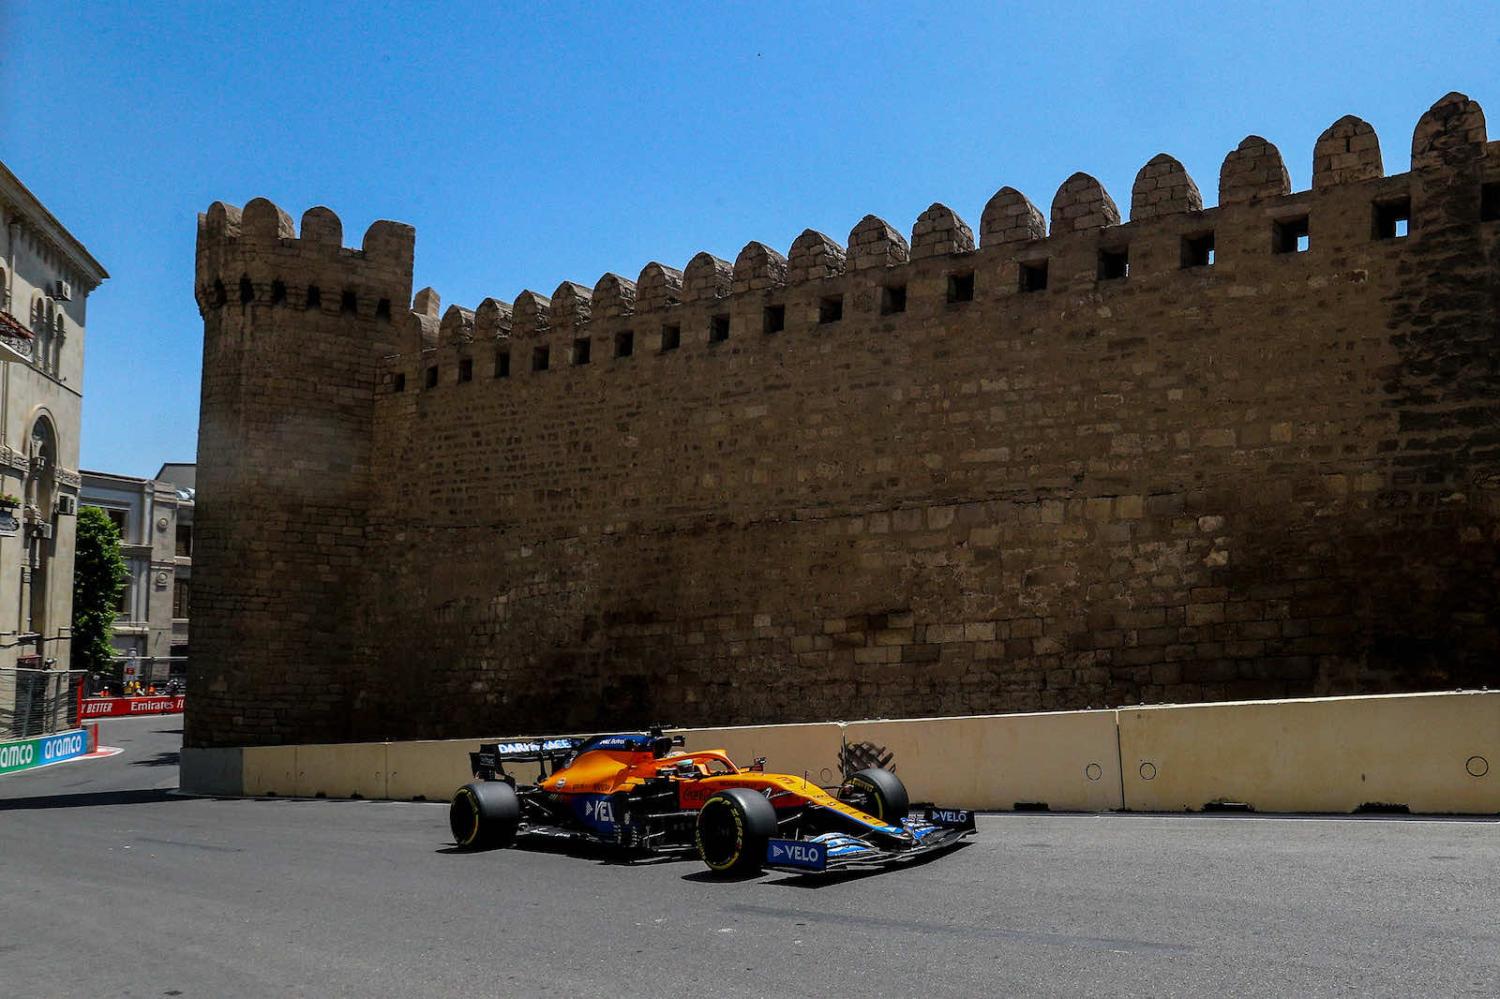 Daniel Ricciardo of Australia driving ahead of the F1 Grand Prix of Azerbaijan at Baku city circuit, Azerbaijan (Aziz Karimov/Getty Images)